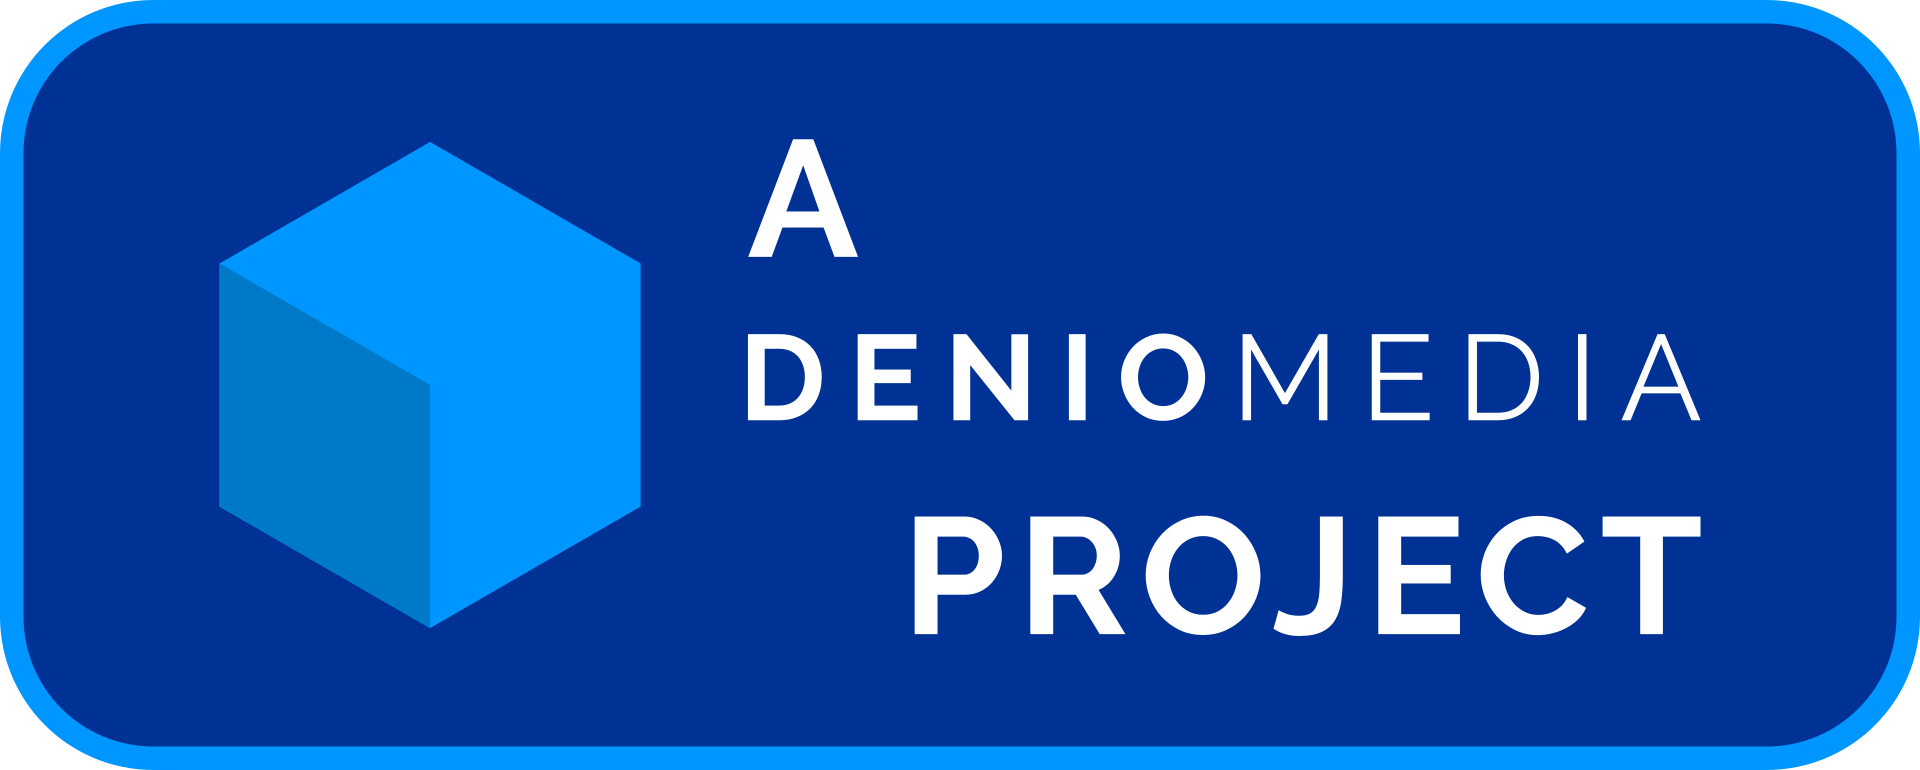 A DenioMedia Project